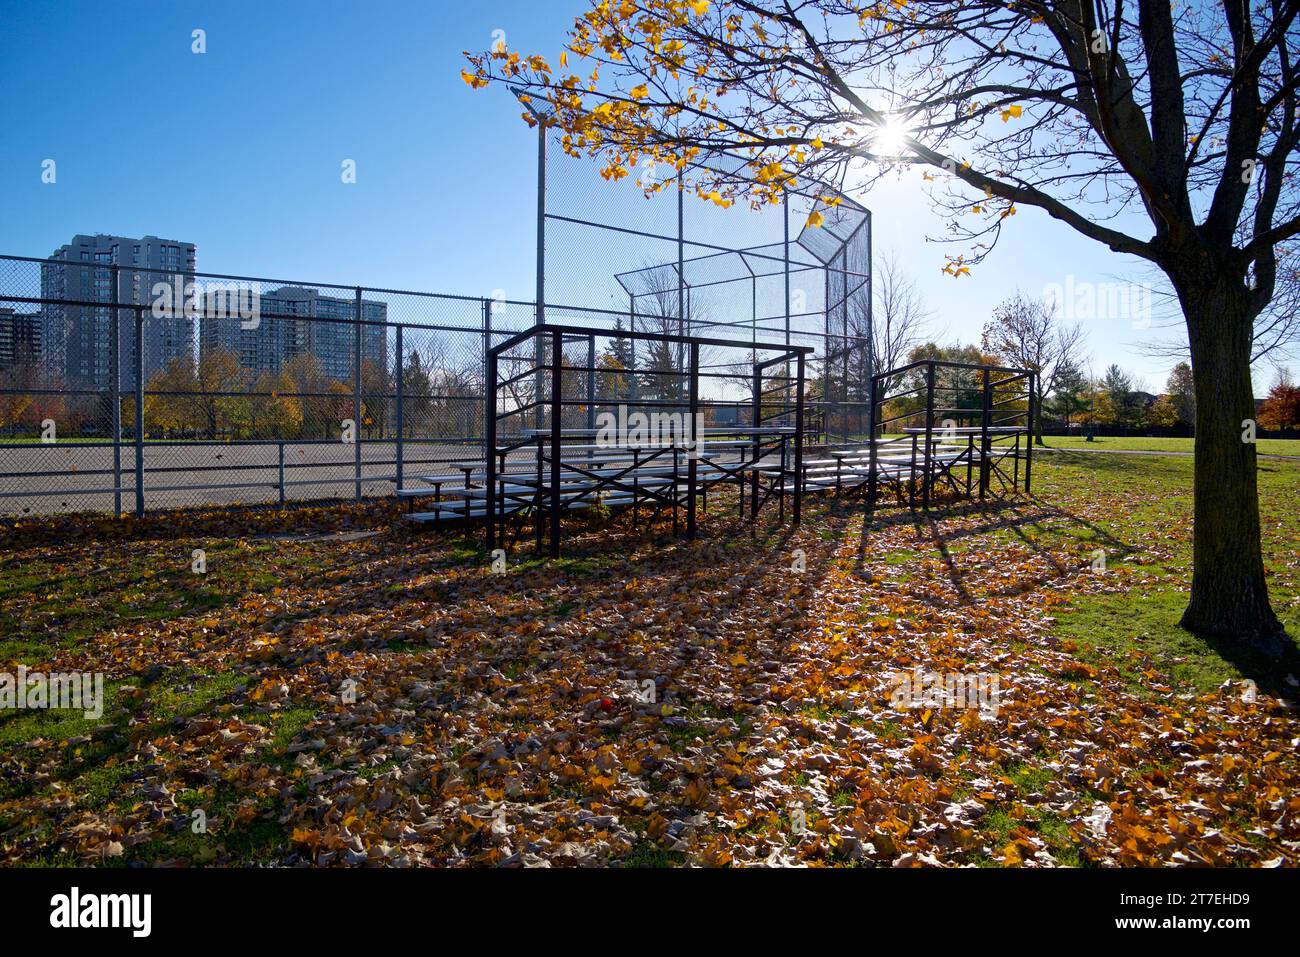 Baseball diamond of a public park with autumn leaf colour Stock Photo